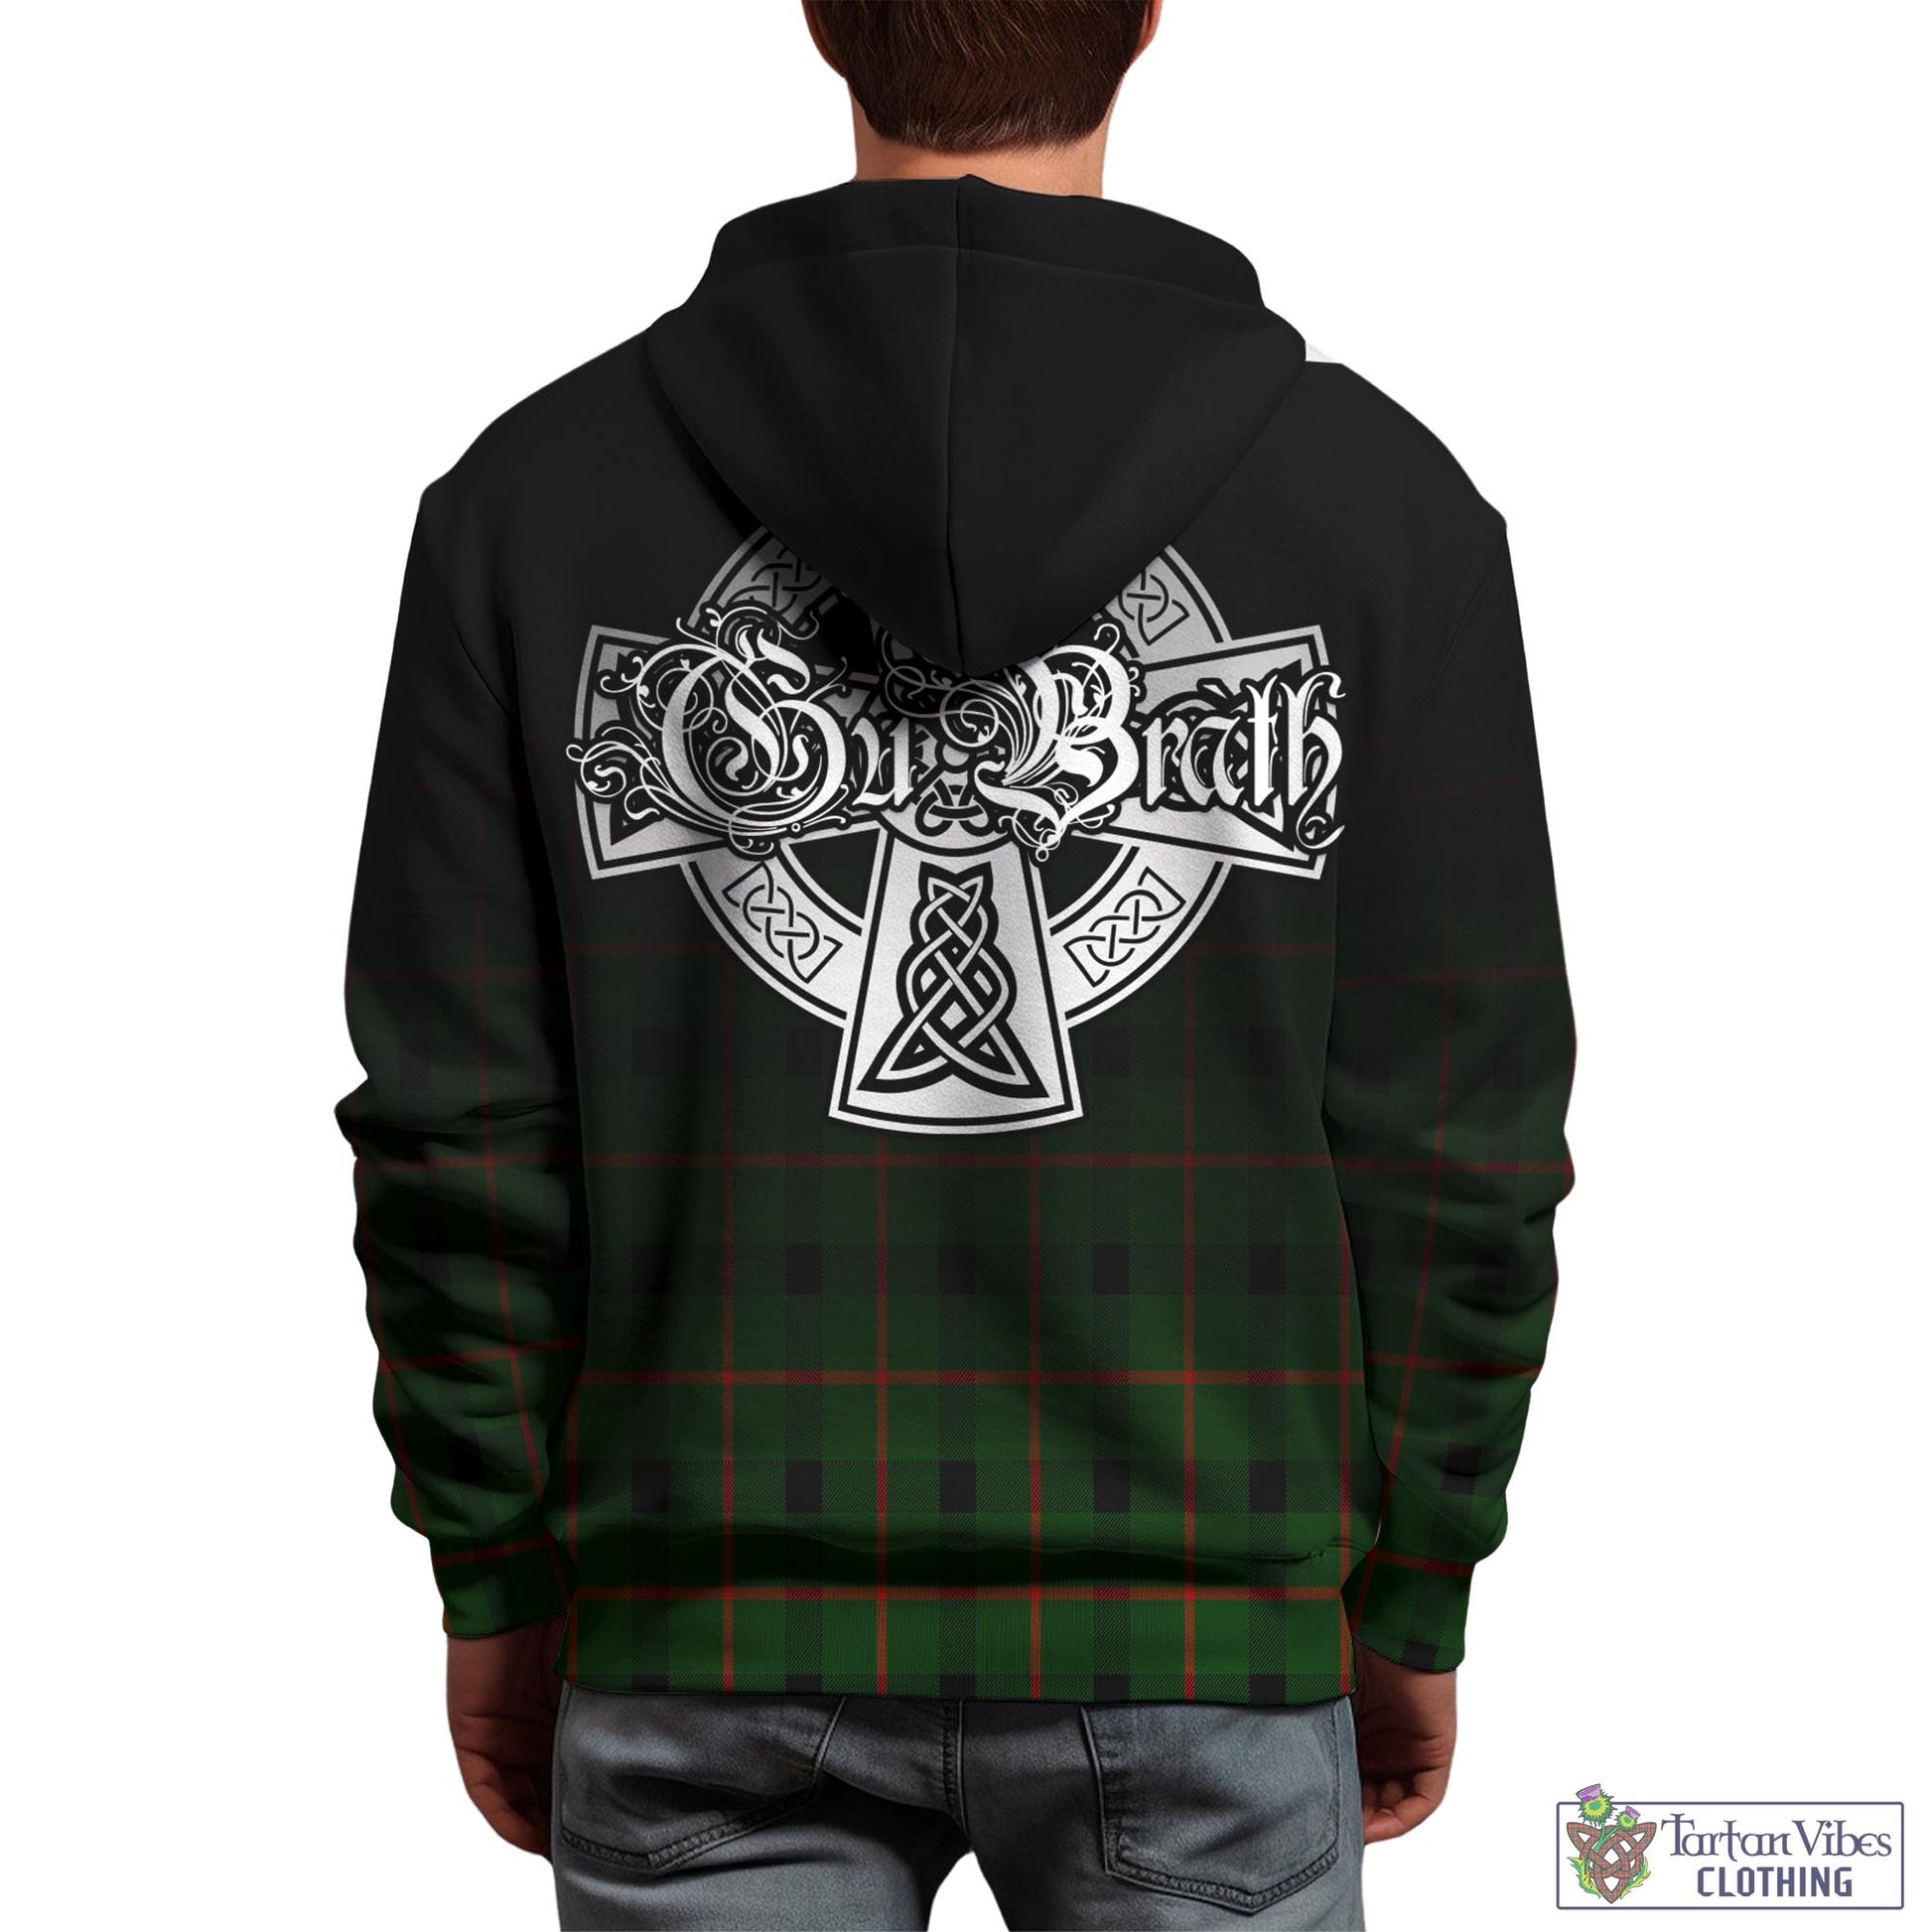 Tartan Vibes Clothing Kincaid Modern Tartan Hoodie Featuring Alba Gu Brath Family Crest Celtic Inspired